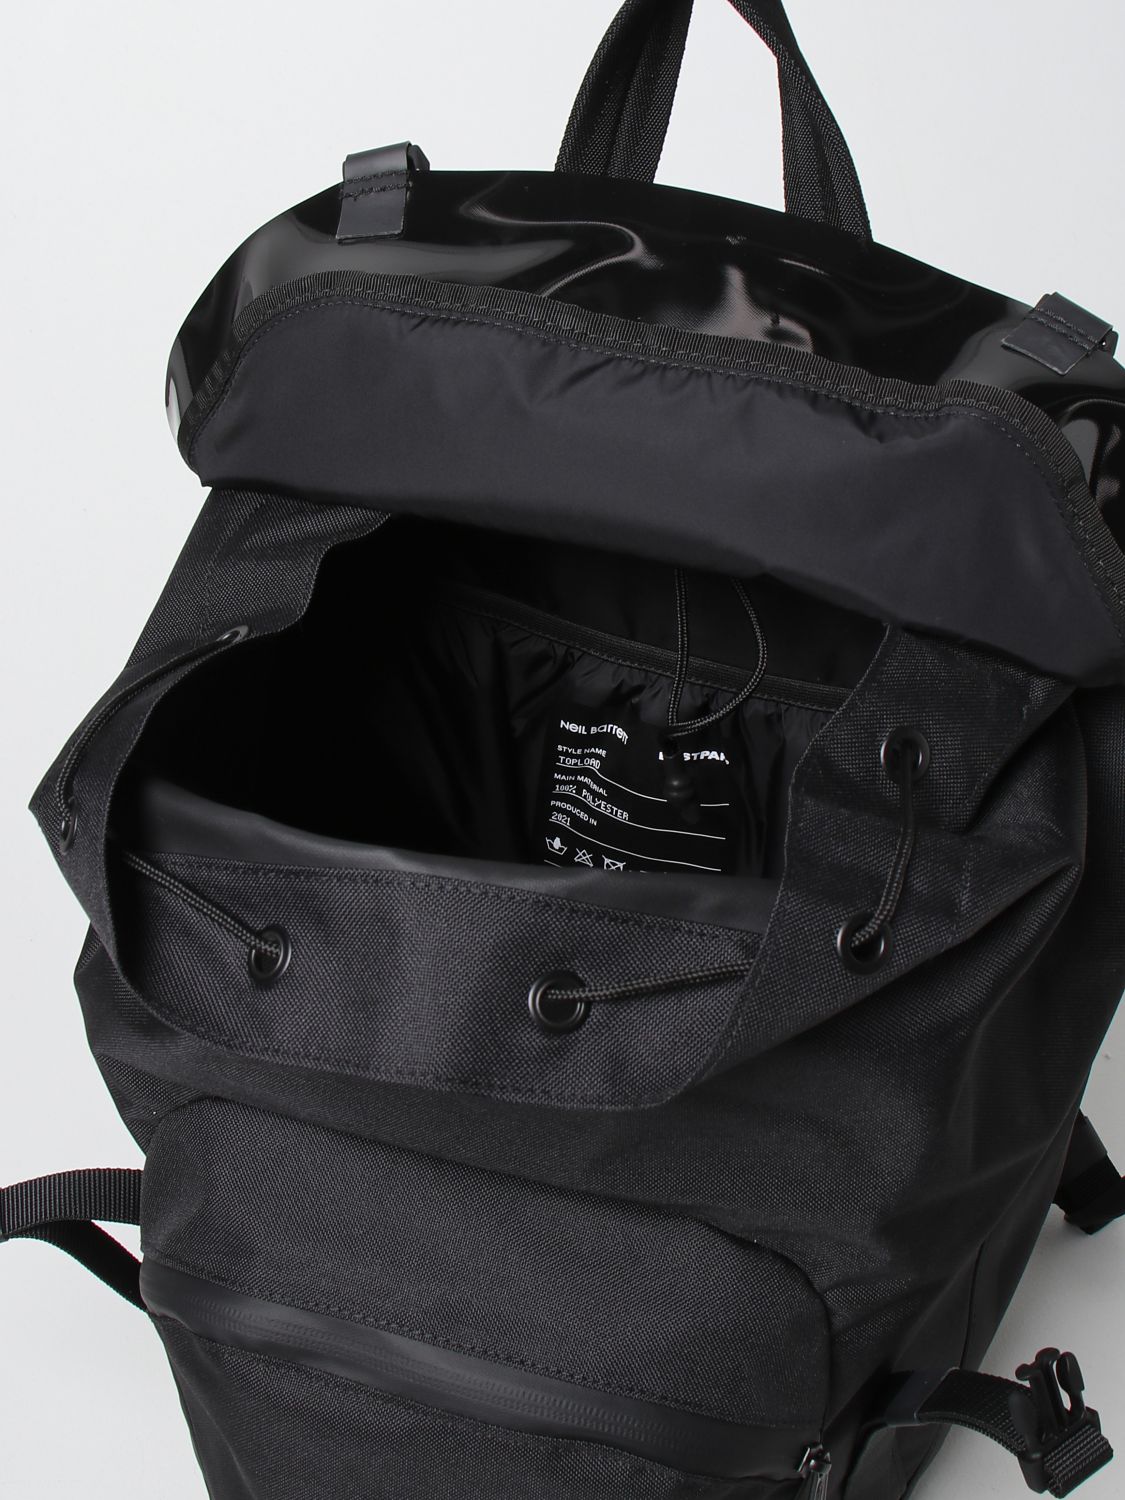 Neil Barrett x Eastpak backpack in technical fabric